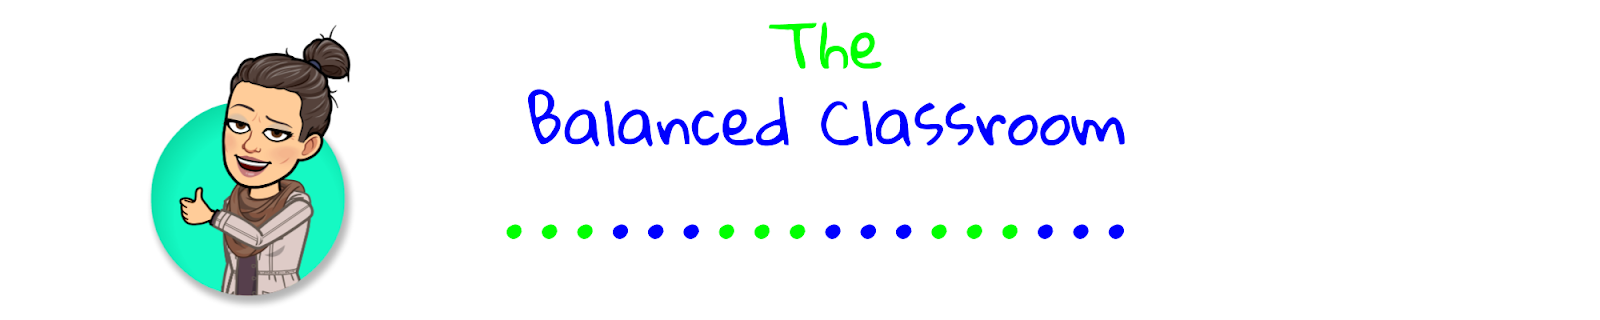 The Balanced Classroom